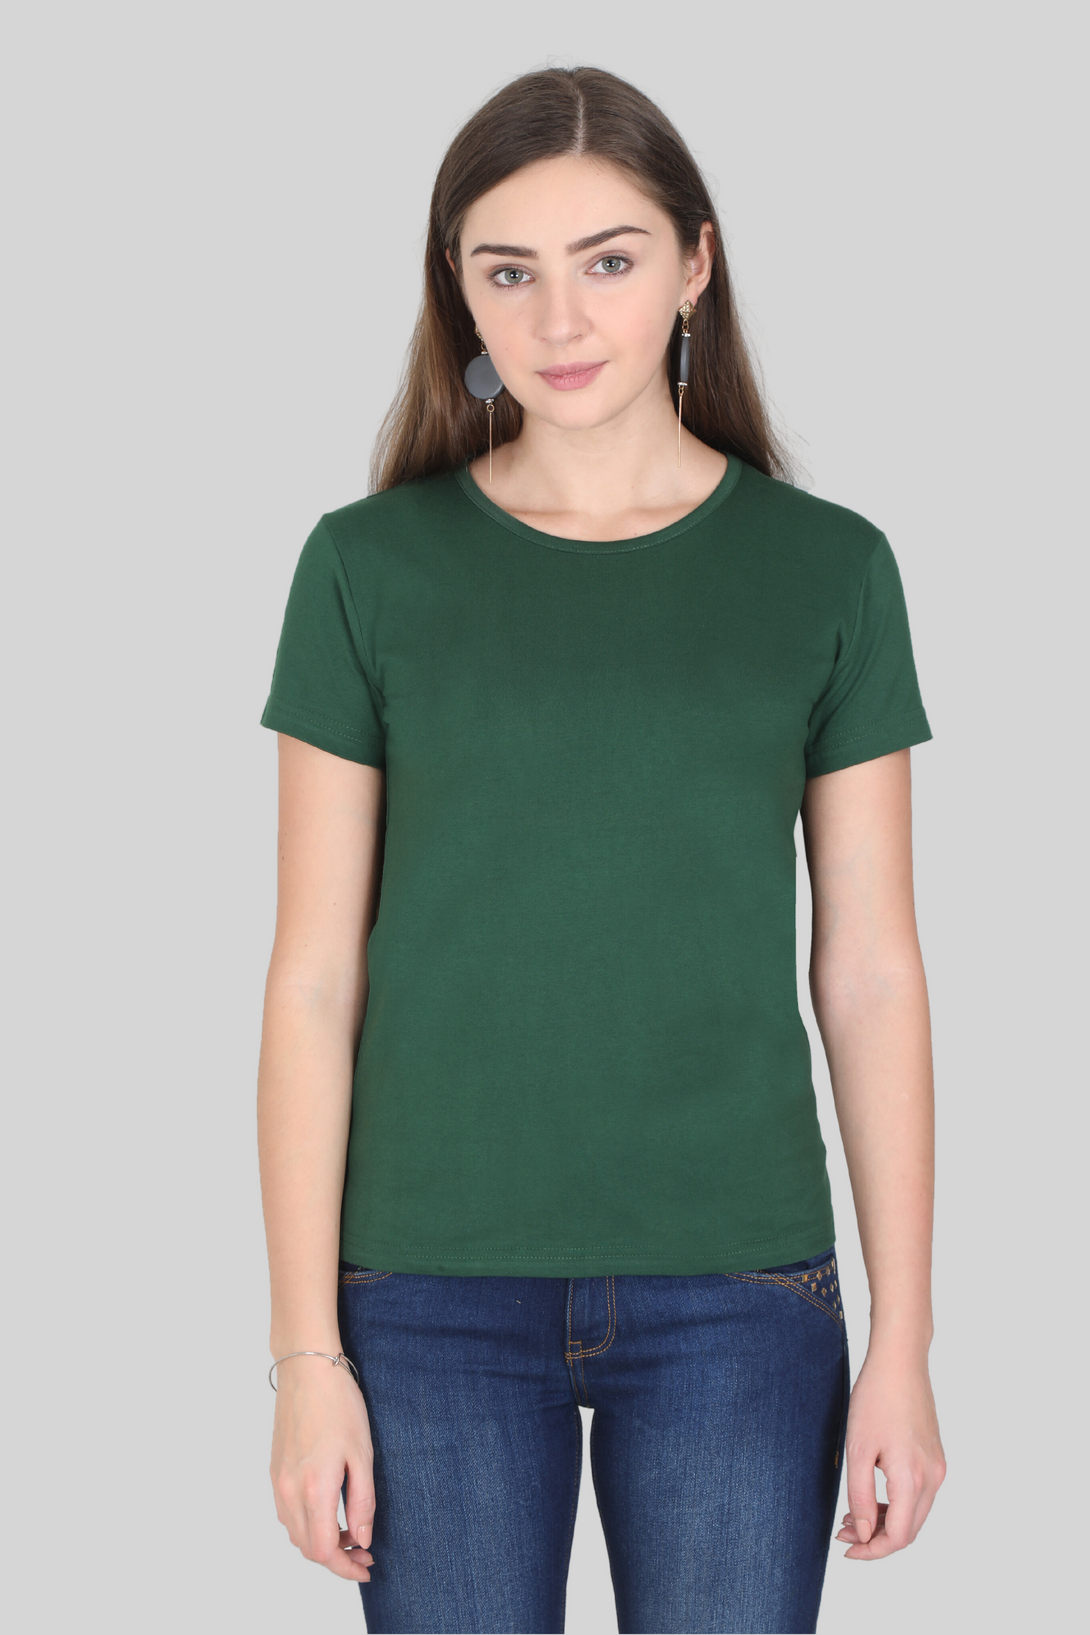 Bottle Green Scoop Neck T-Shirt For Women - WowWaves - 2